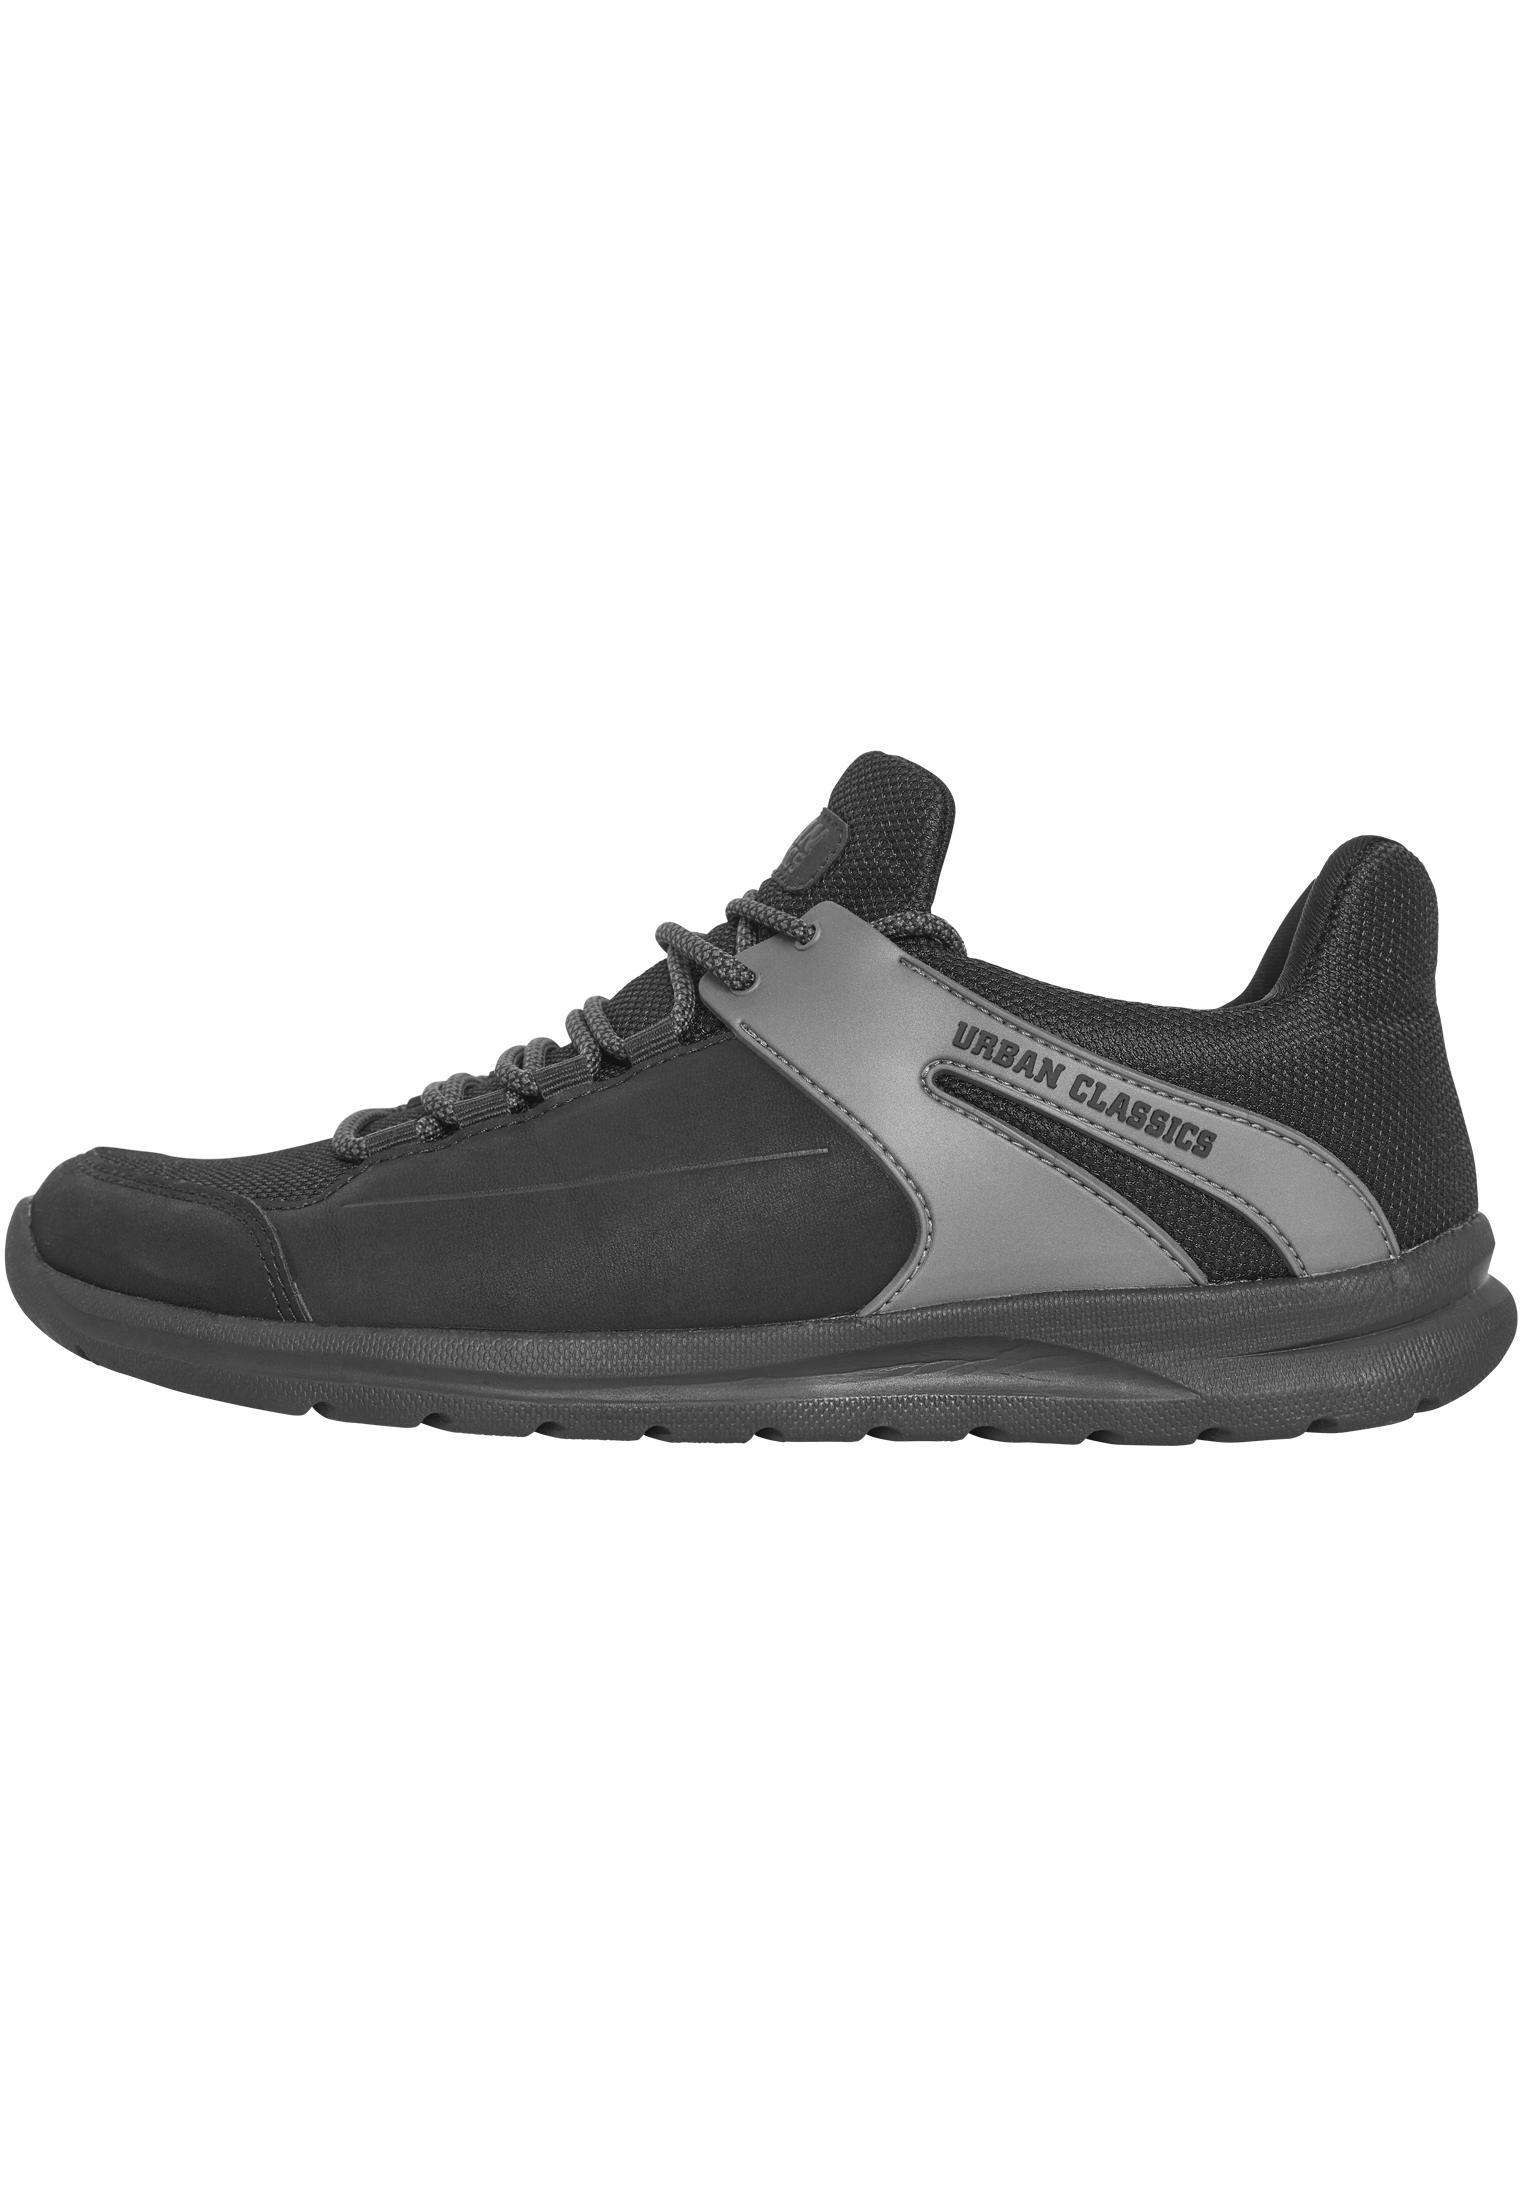 Schuhe Trend Sneaker in Farbe blk/blk/blk